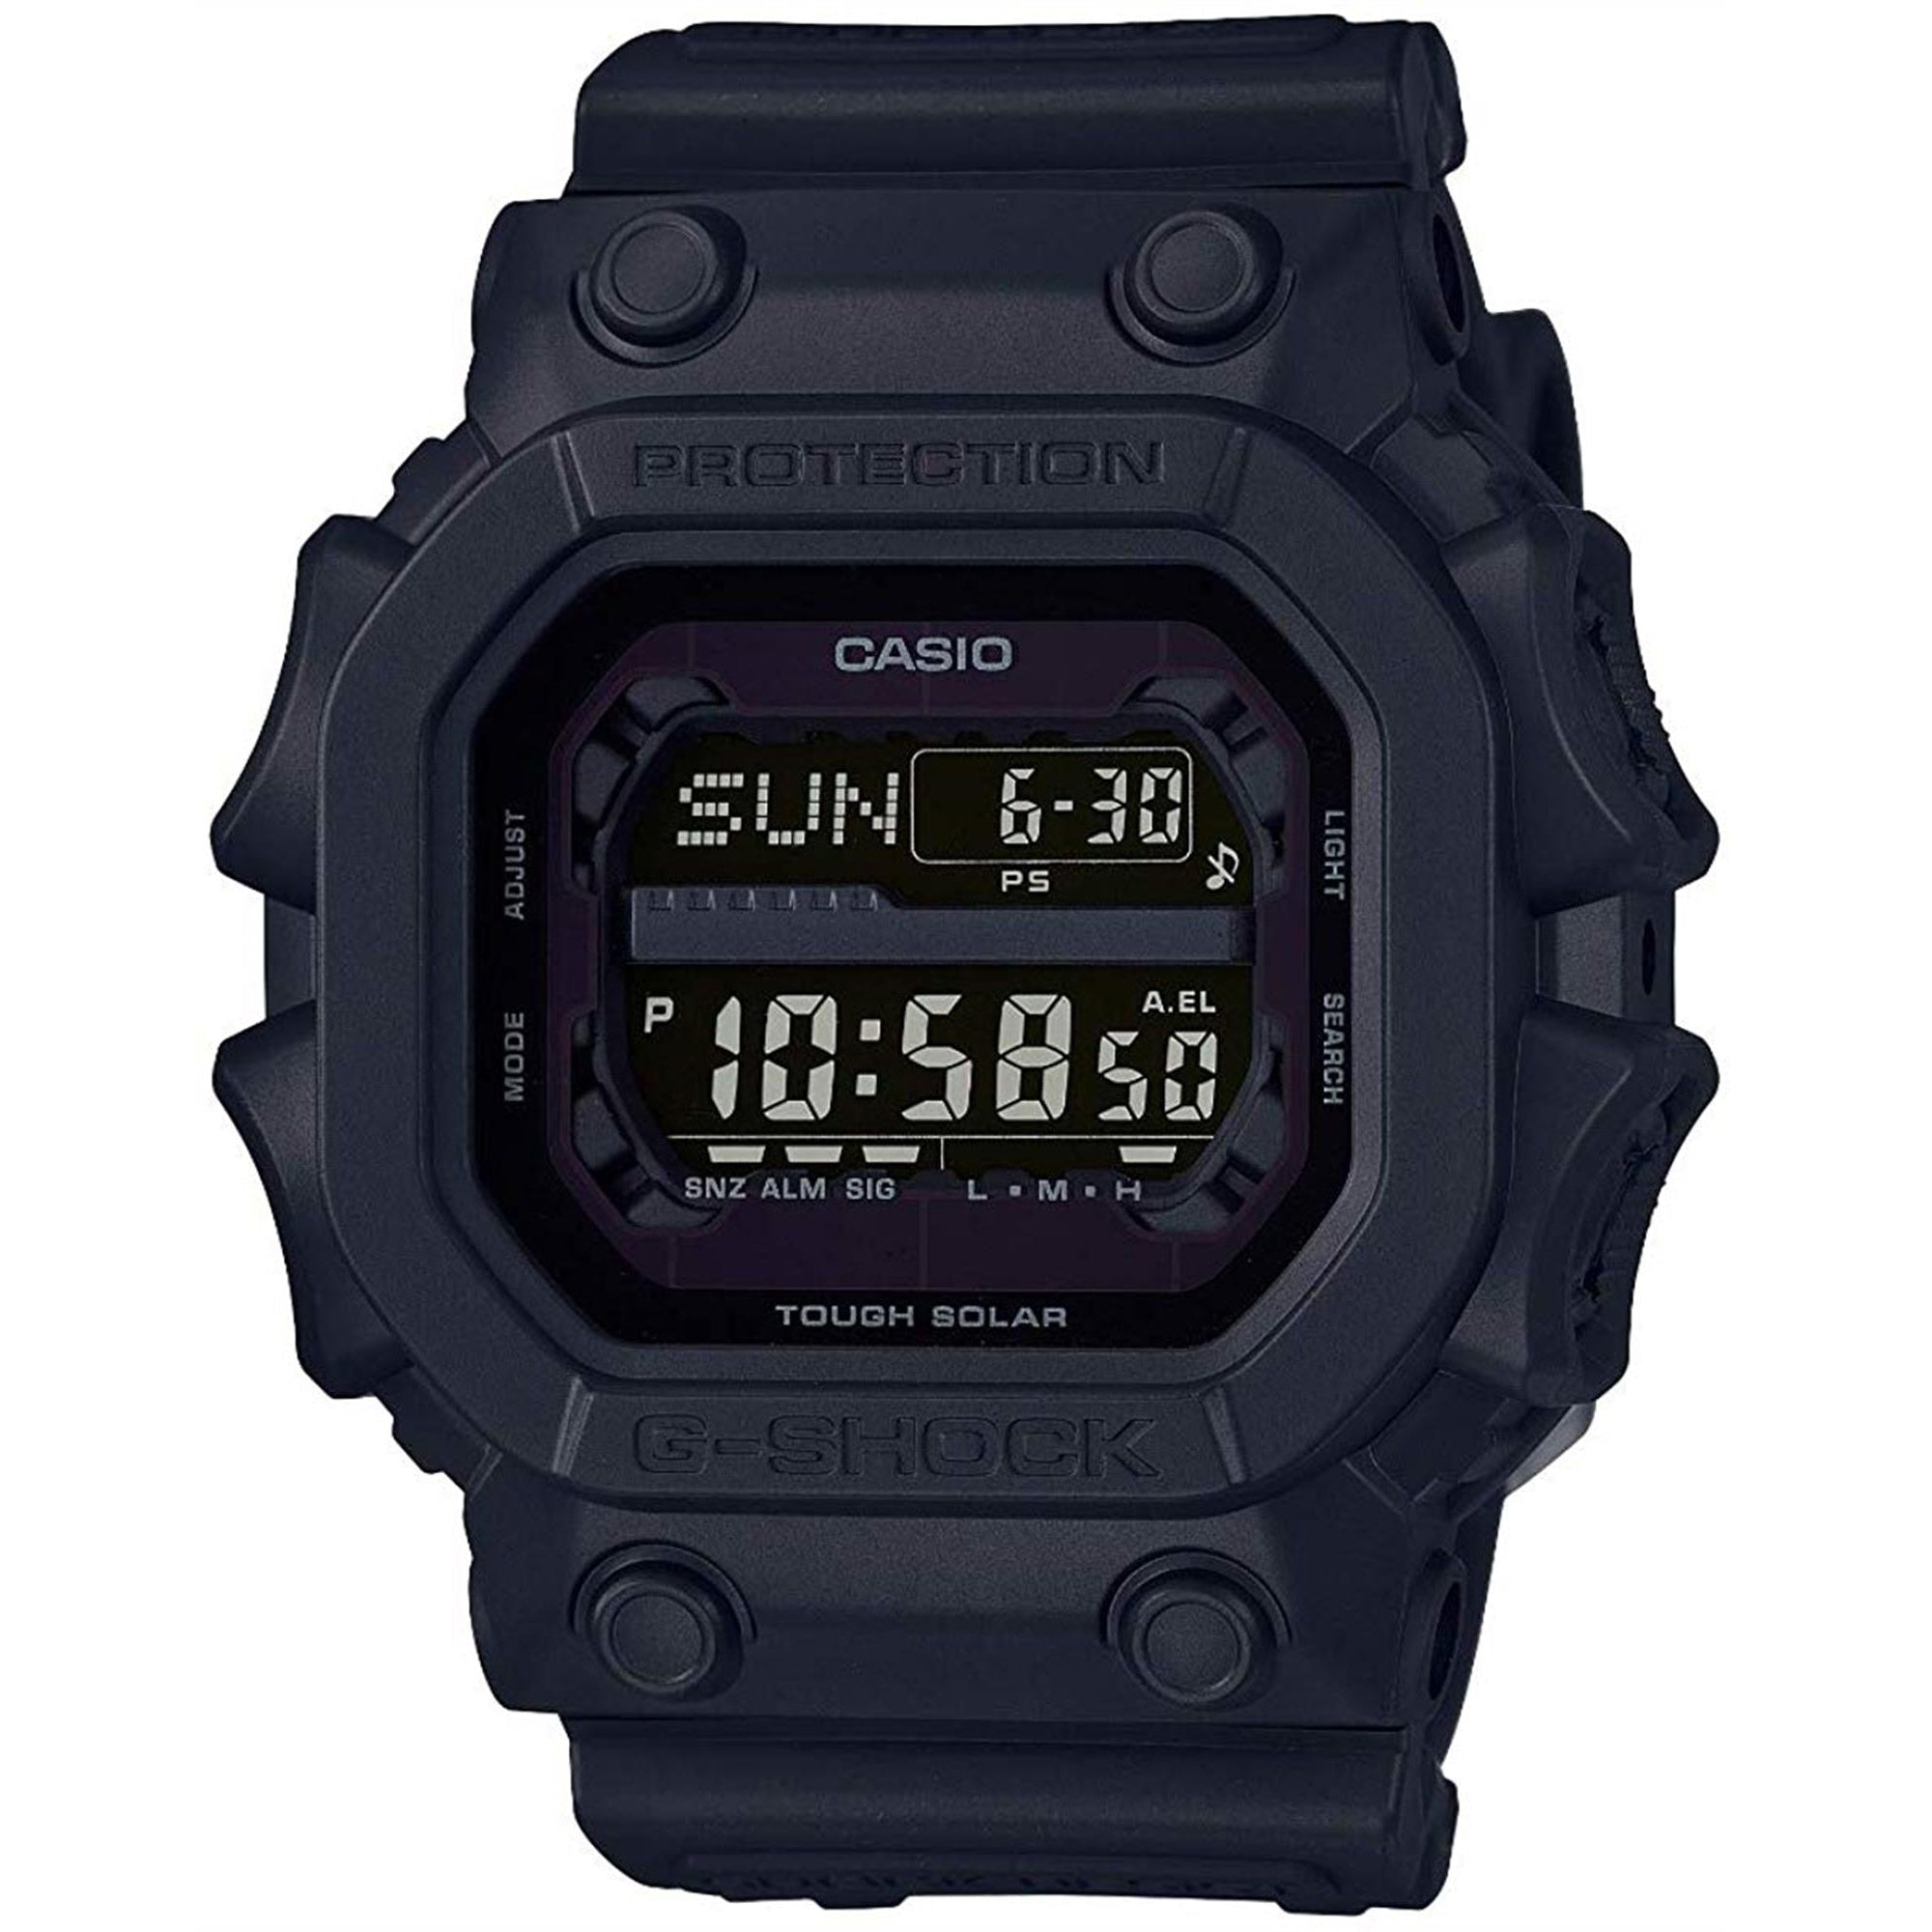 Image of G-Shock GX-56BB-1ER Classic Multifunction LCD Wristwatch